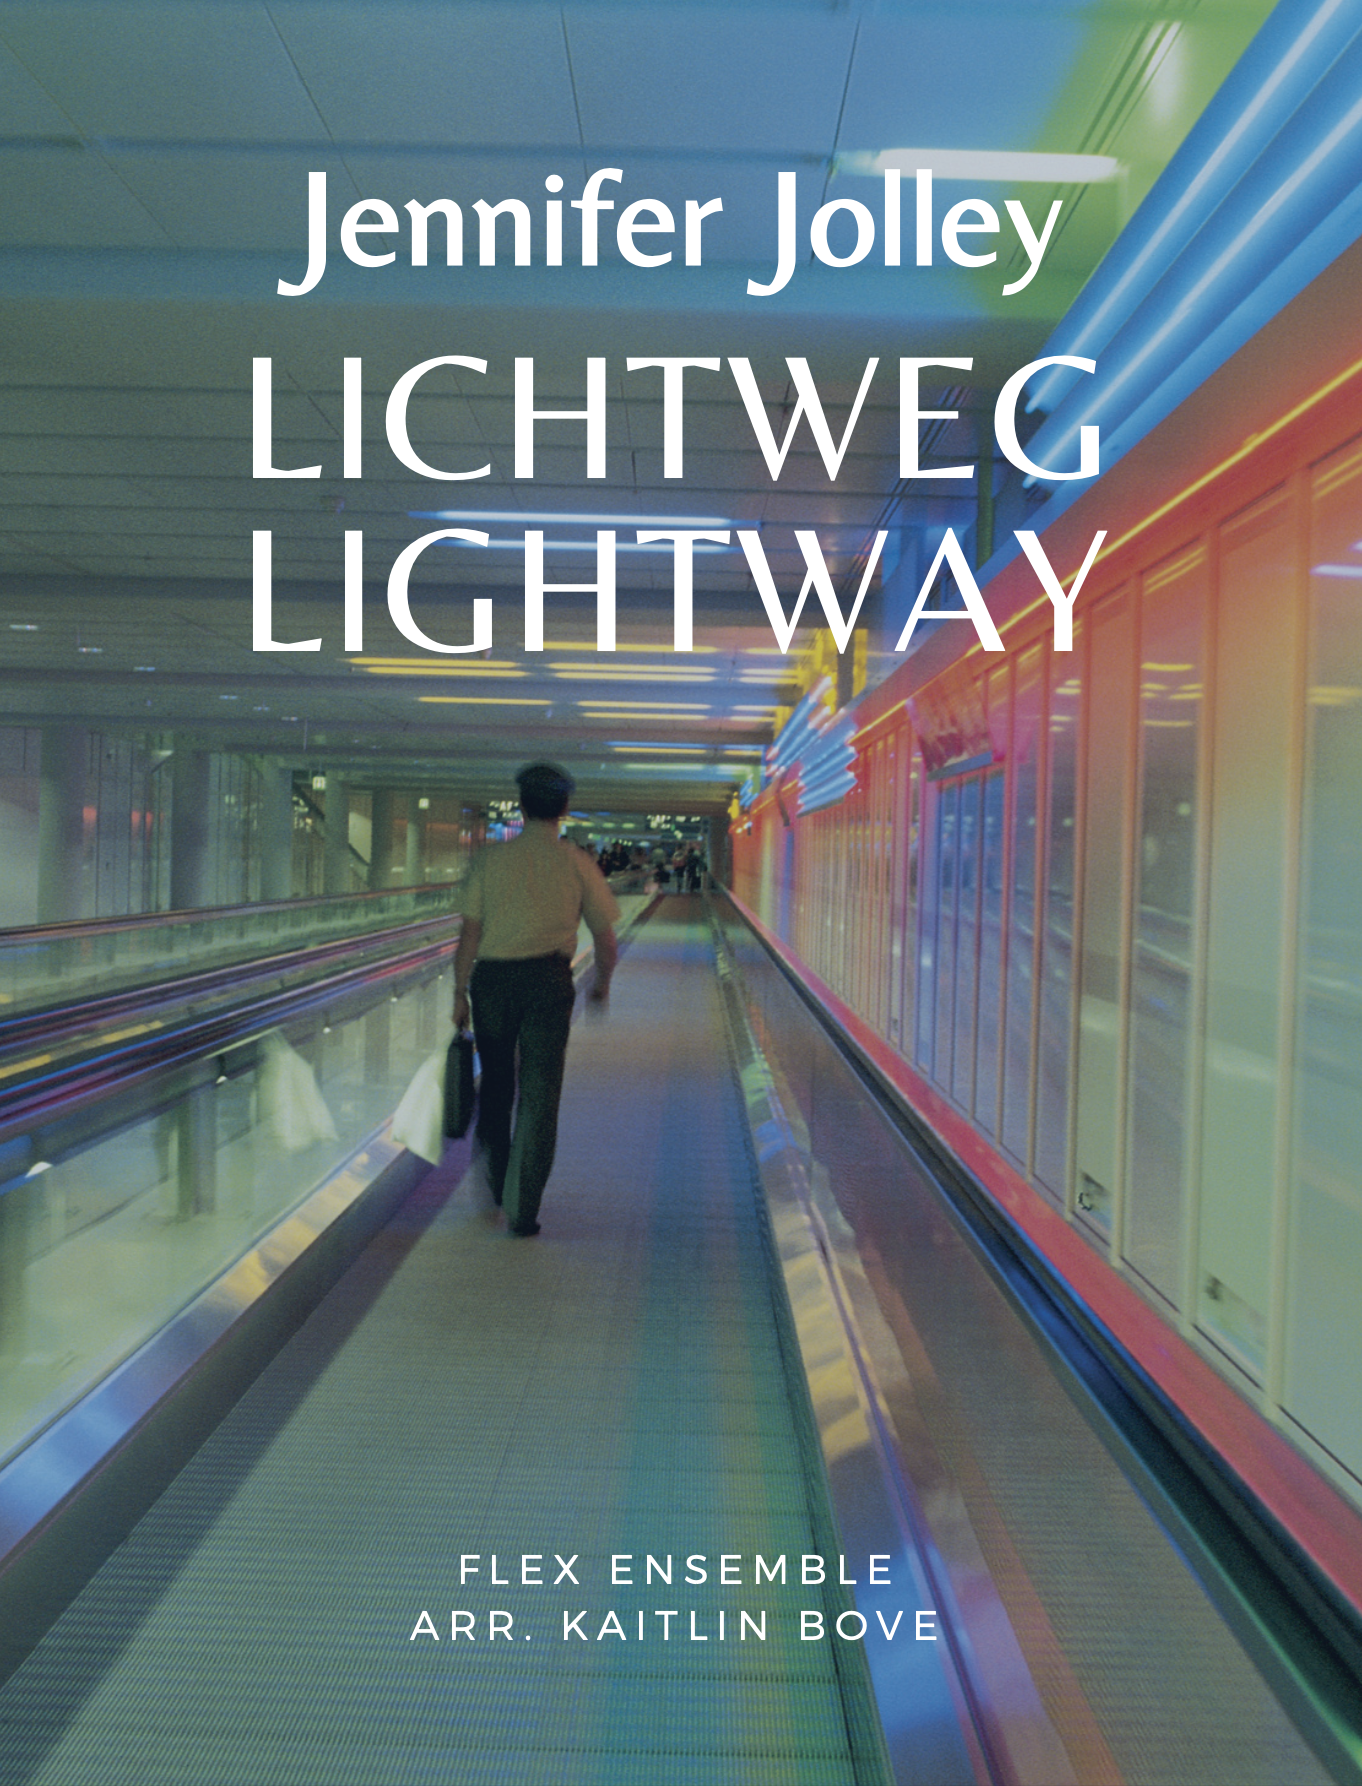 Lichtweg/Lightway (Flex Version, Score Only) by Jennifer Jolley, arr. Bove